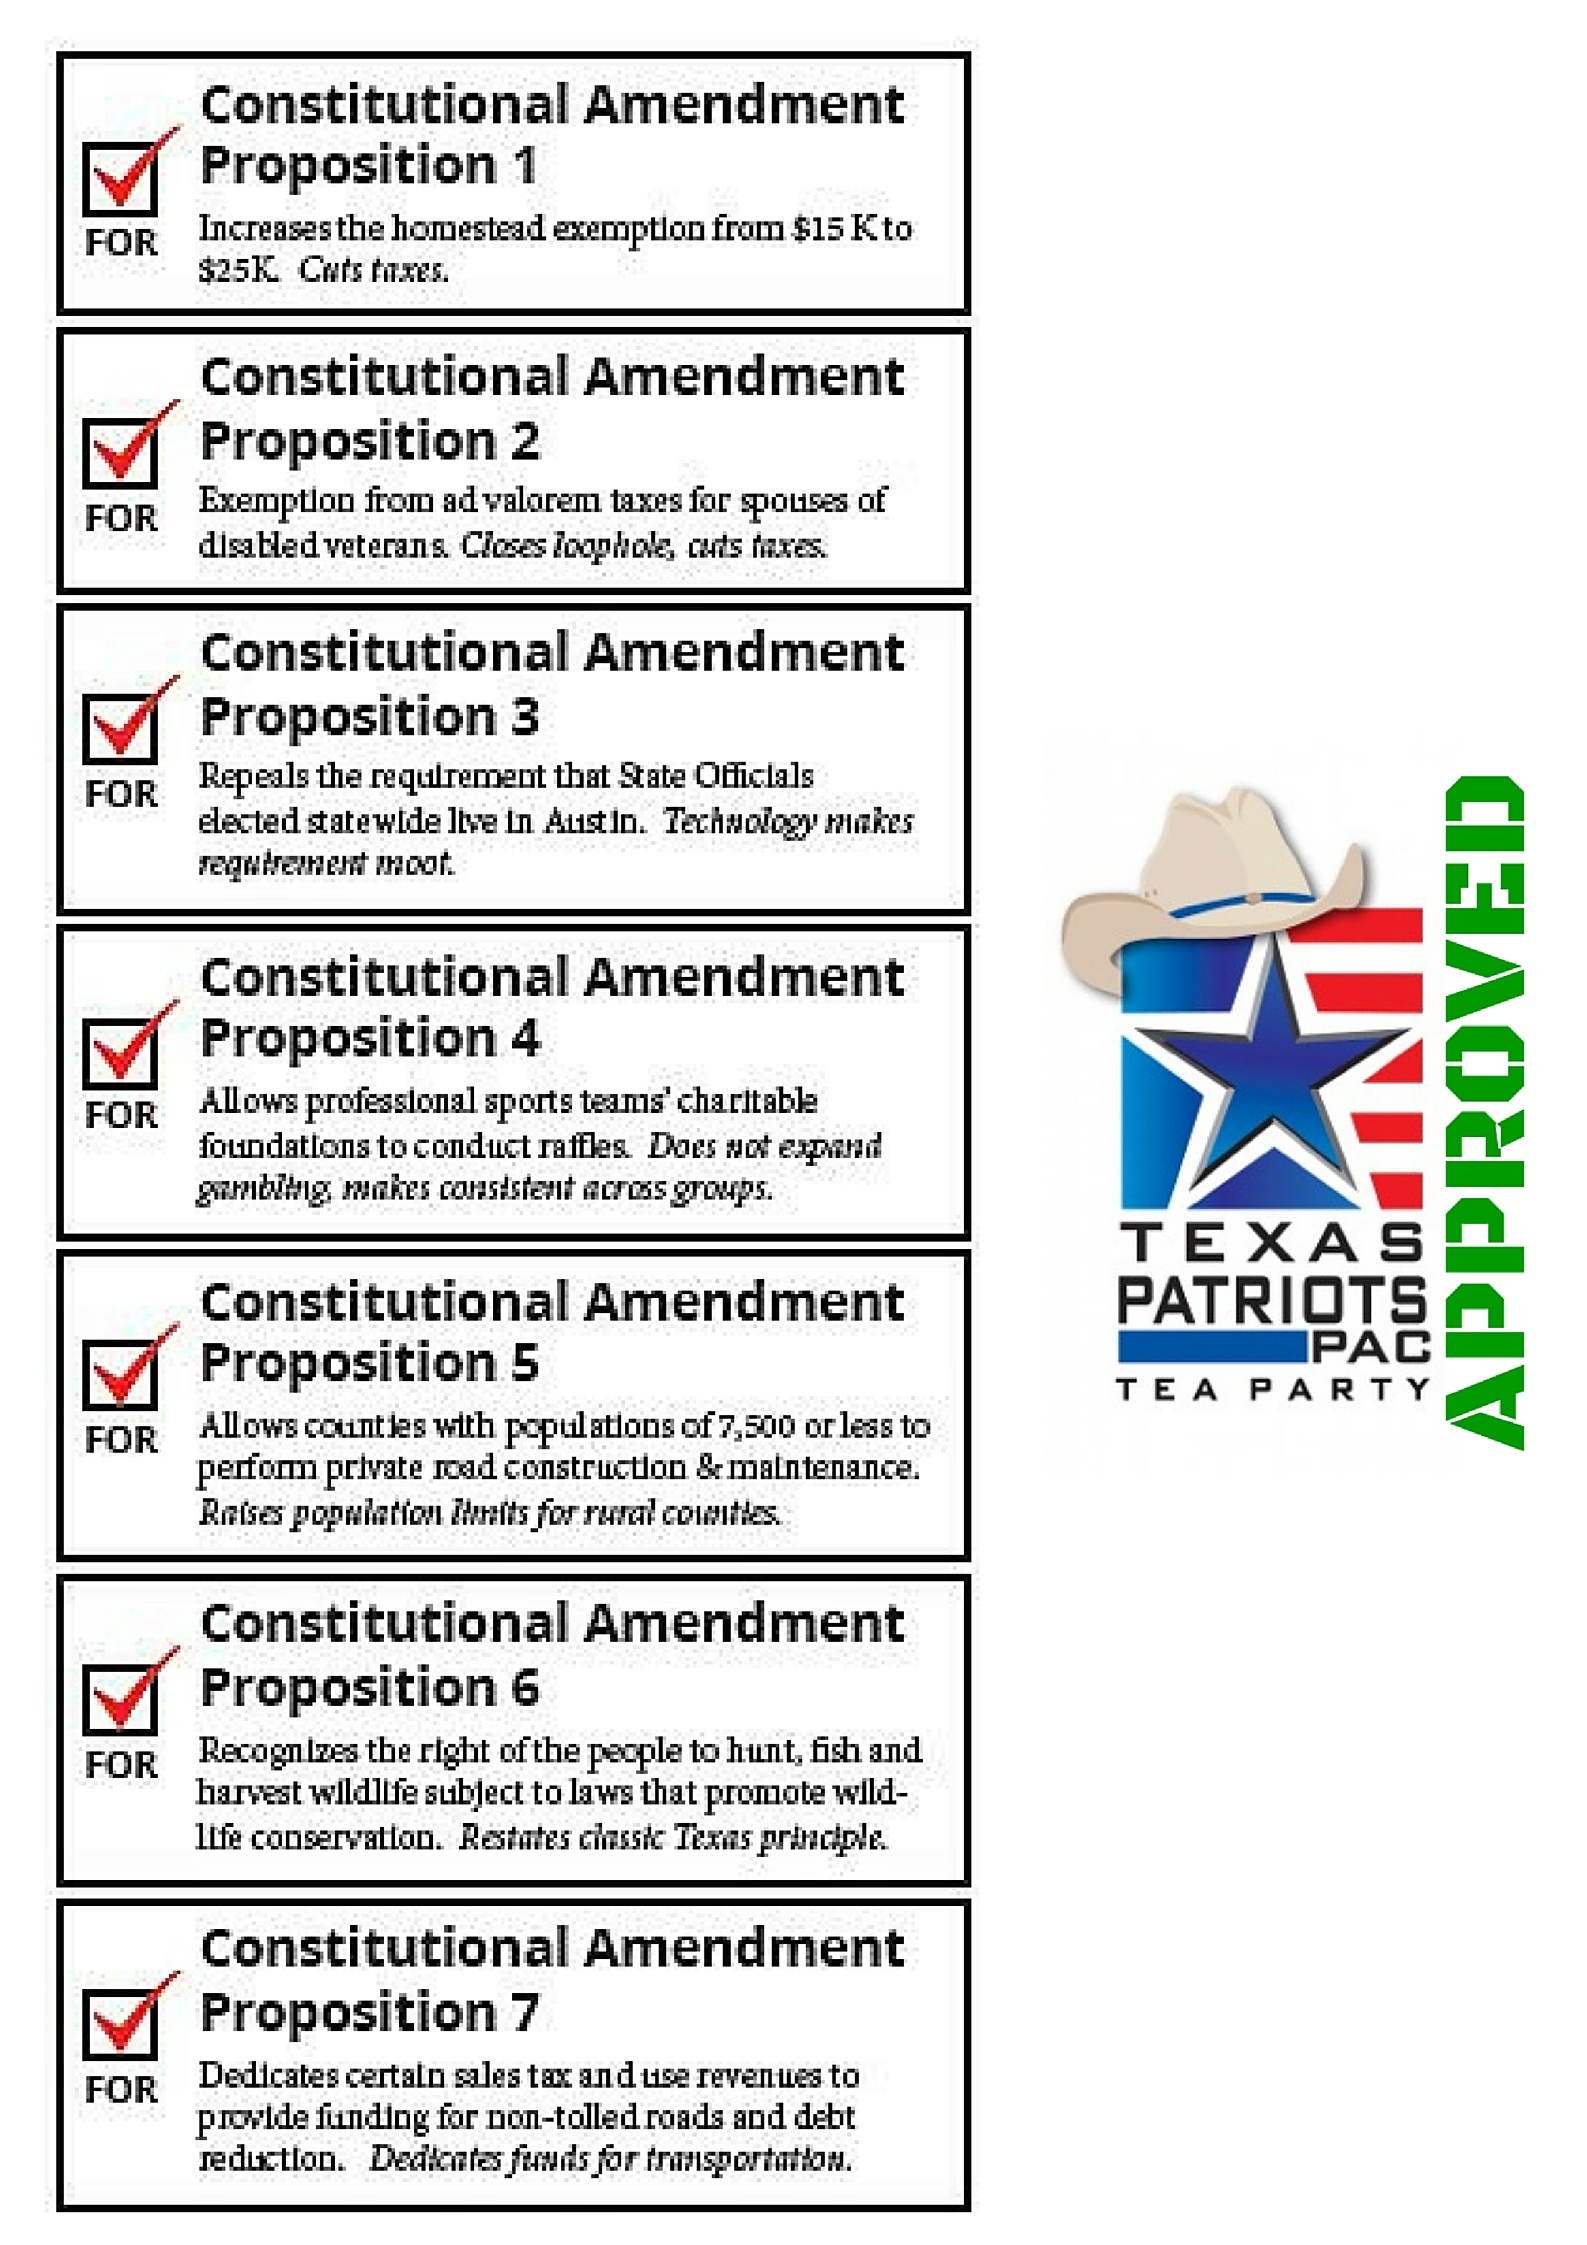 Constitutional Amendments — Texas Patriots PAC